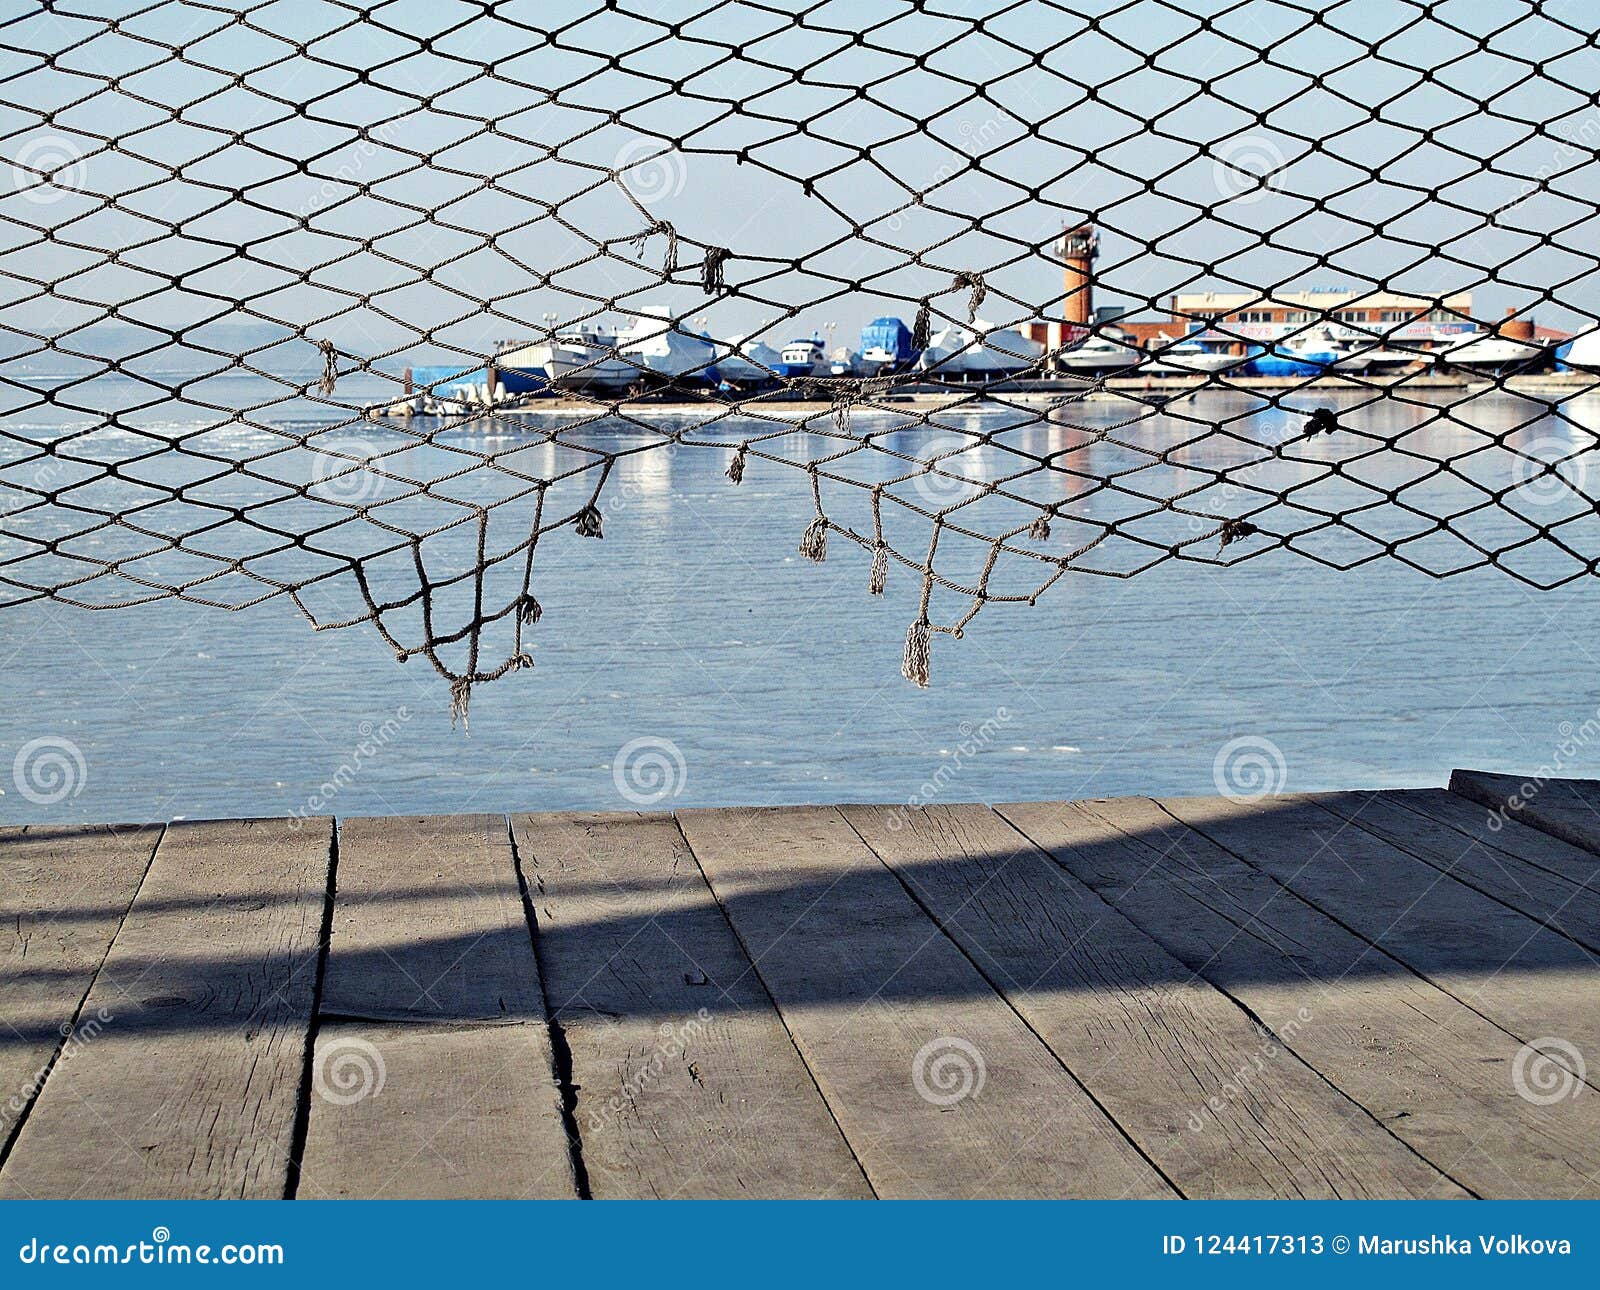 Torn fishing net stock image. Image of pier, cold, walking - 124417313